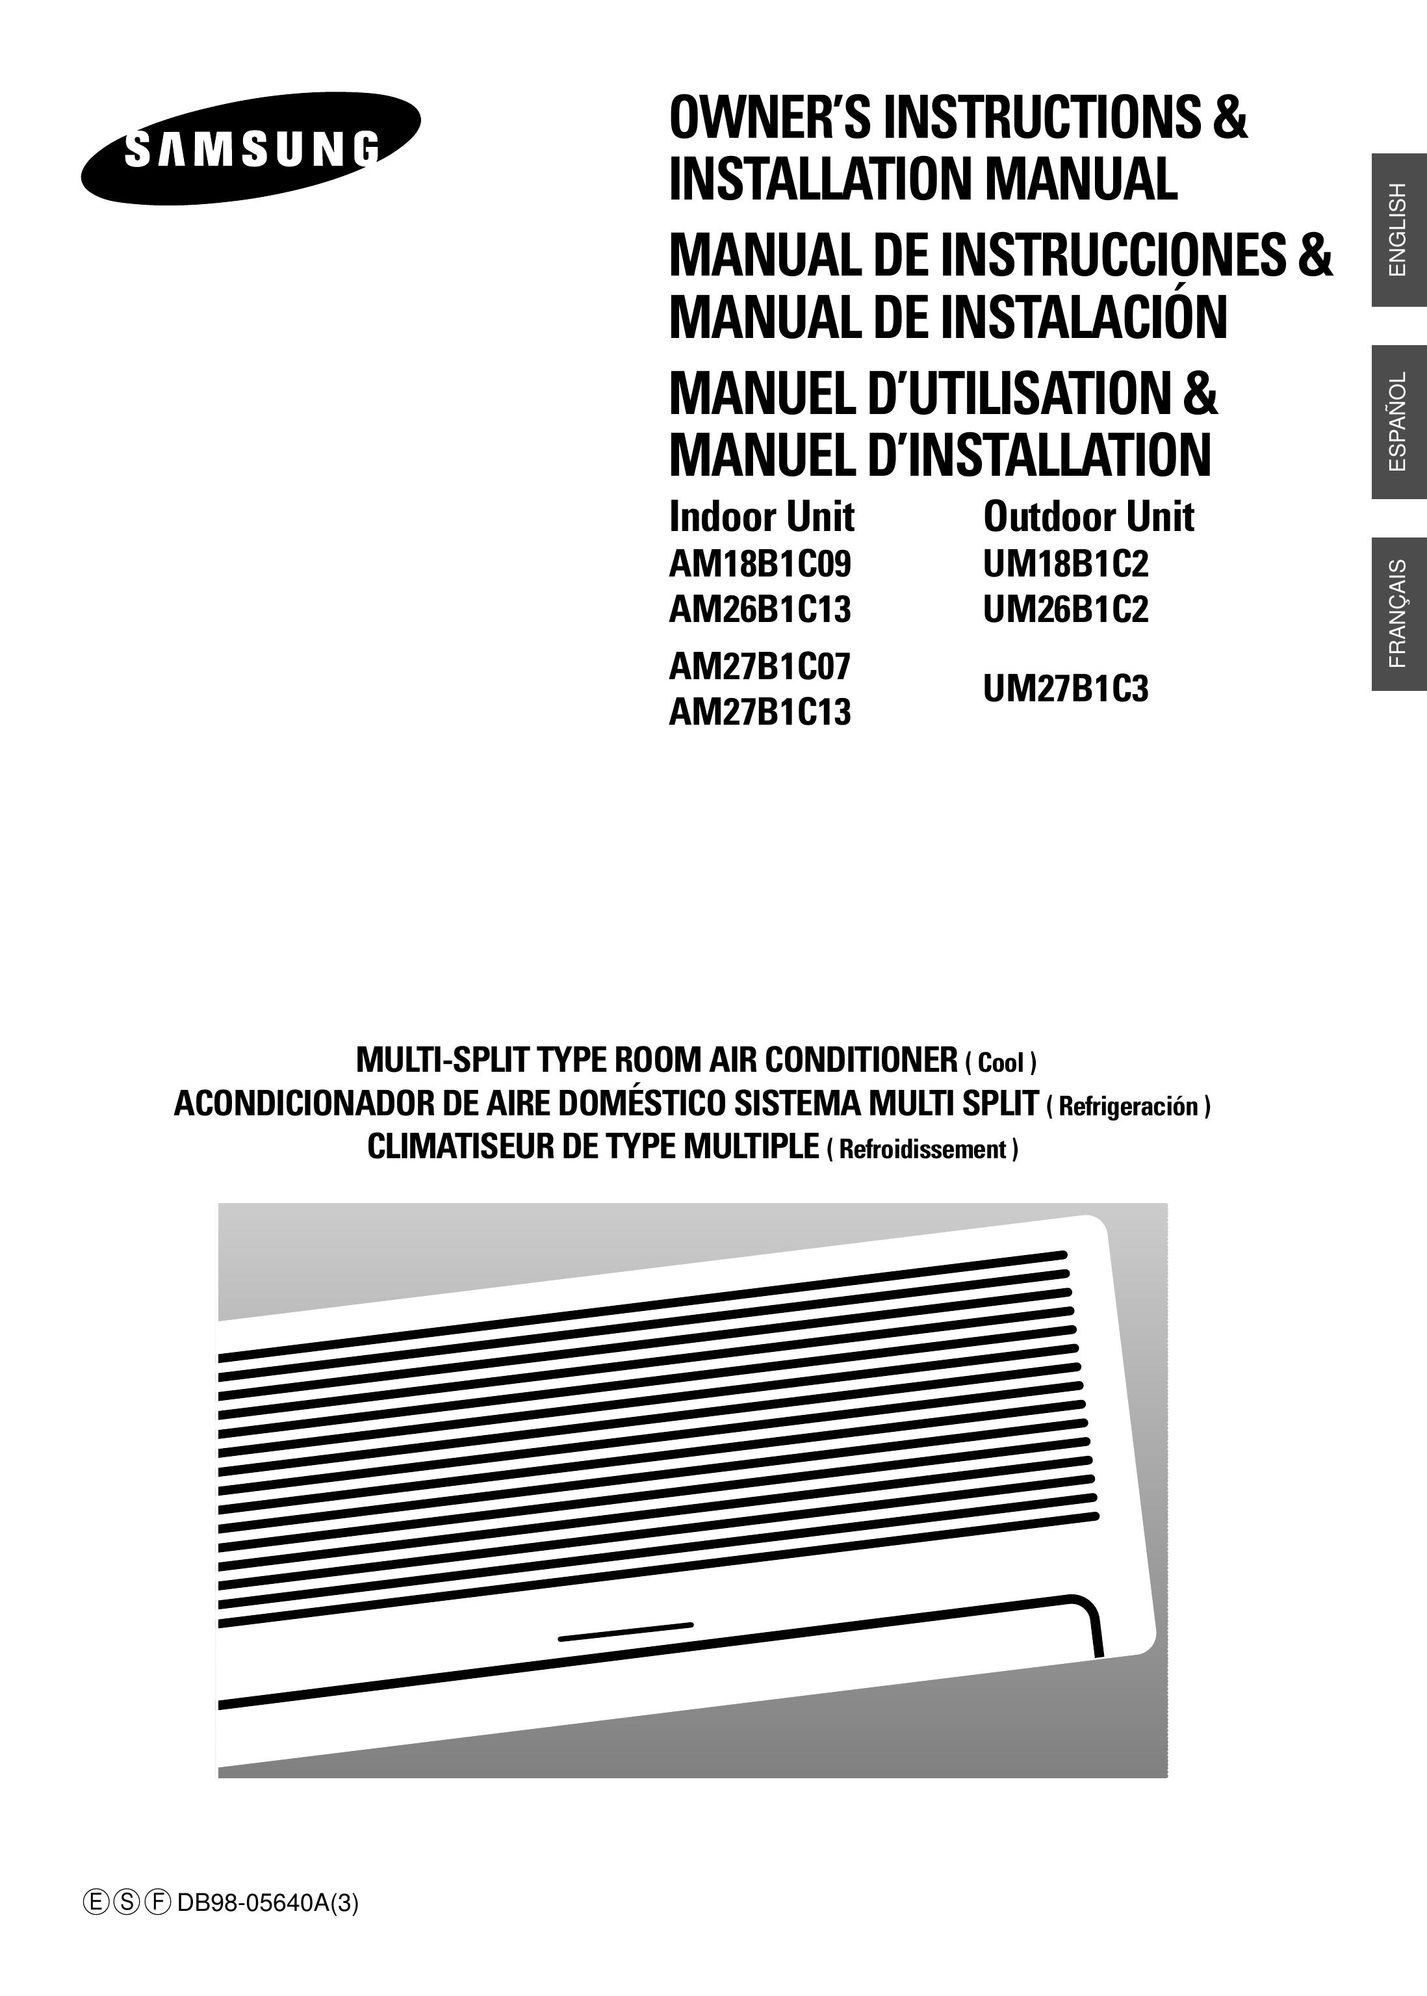 Samsung AM18B1C09 Air Conditioner User Manual